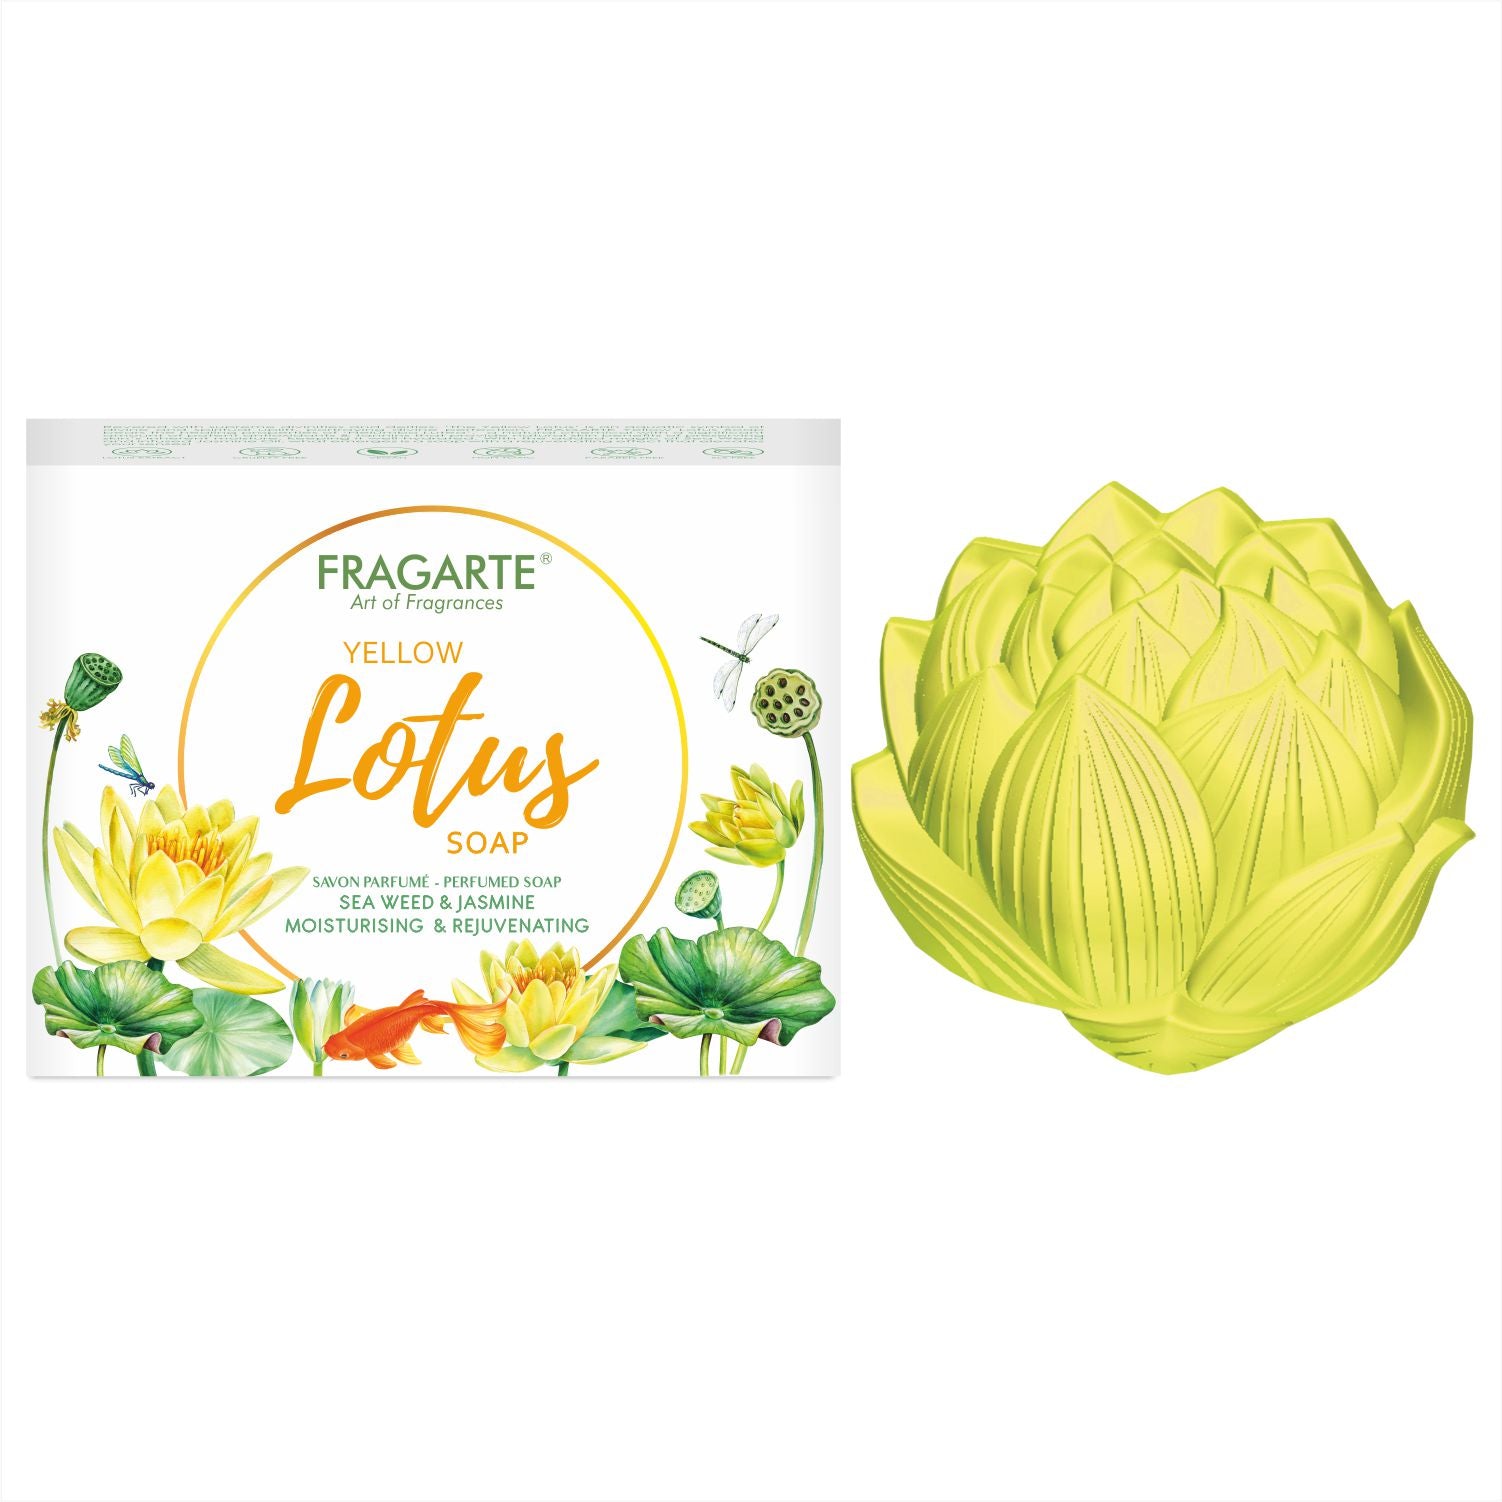 Fragarte Yellow Lotus Soap